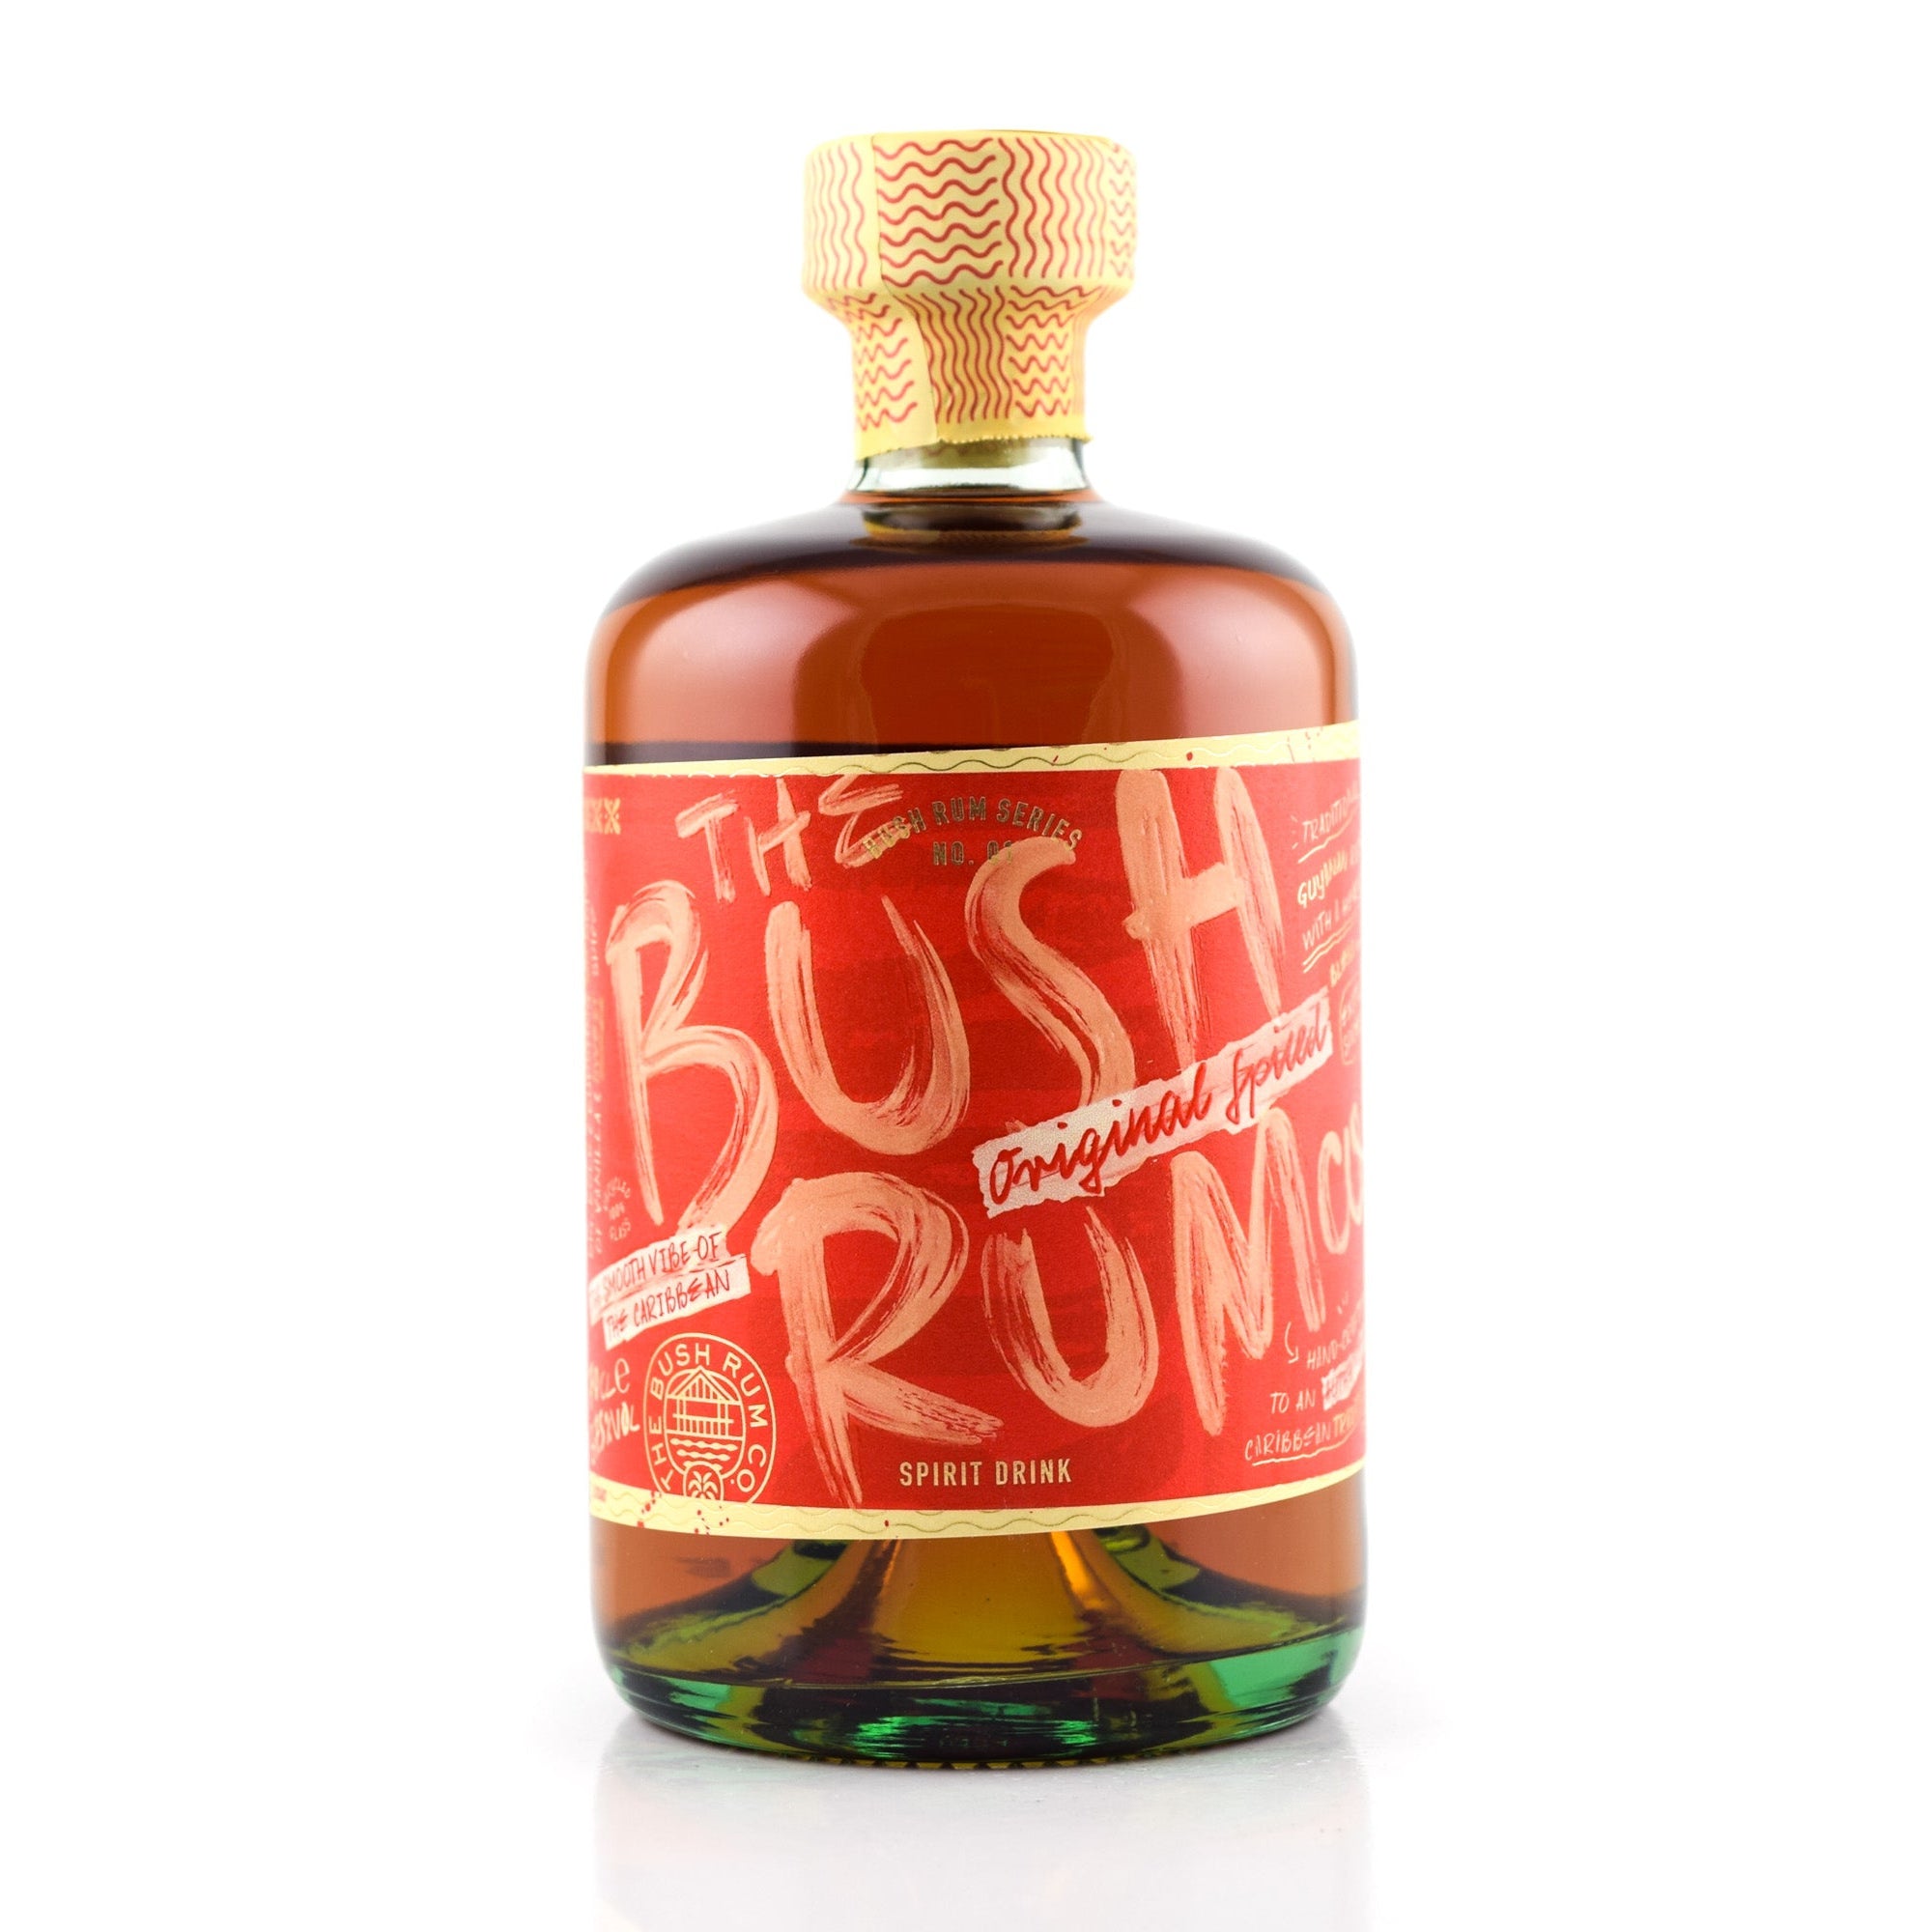 Bush Original Spiced 37,5% Rum 0,7l Vol